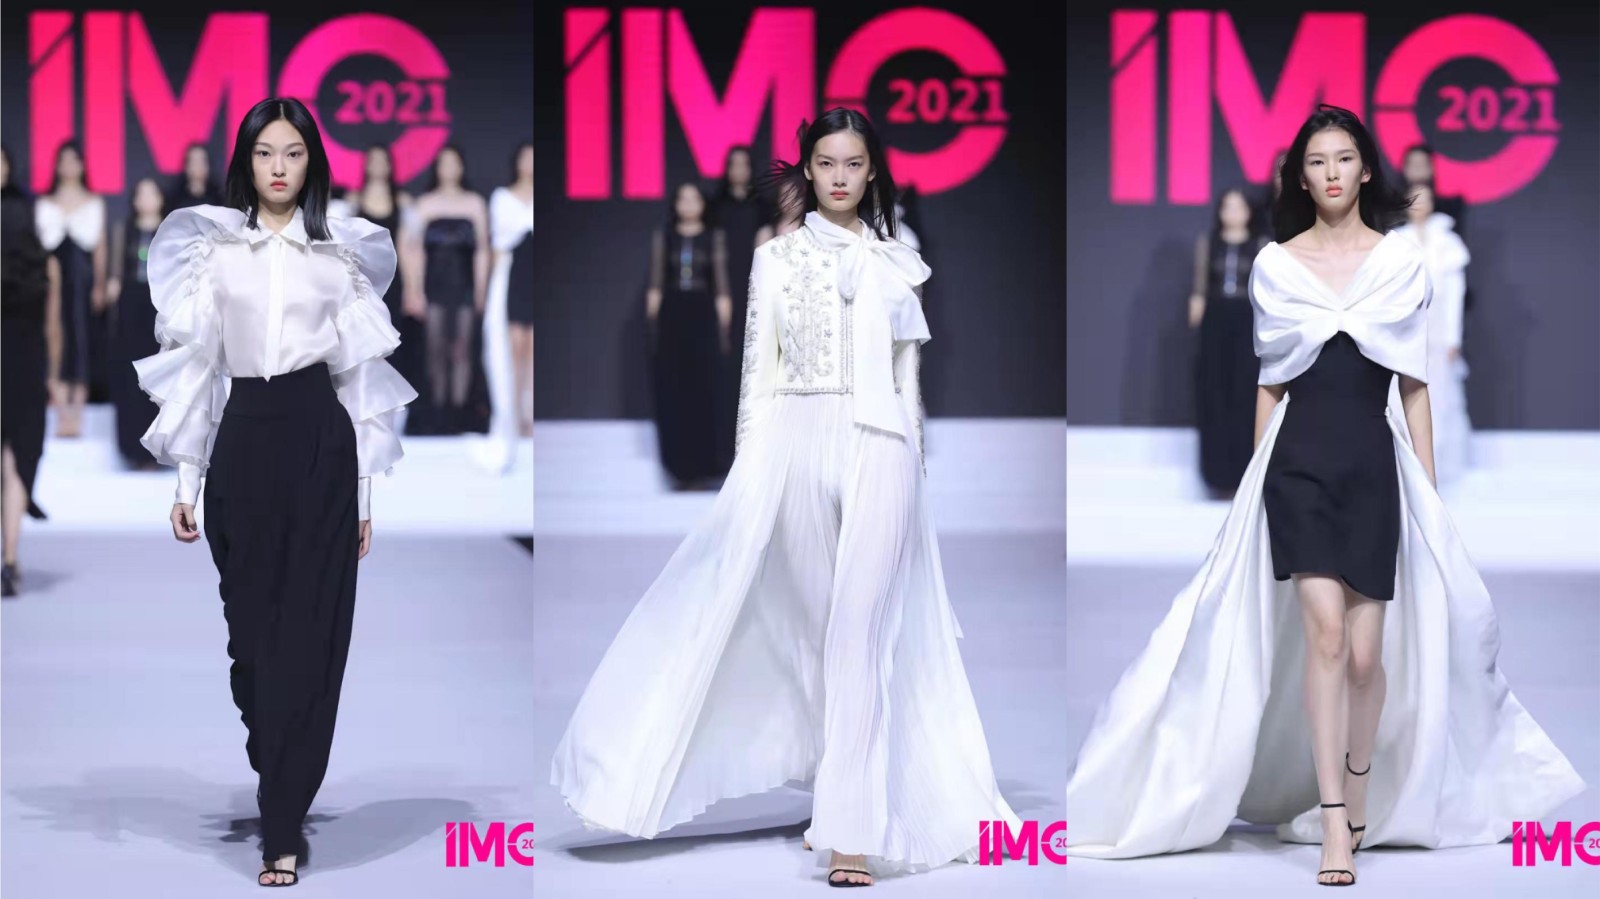 2021imc上海国际模特大赛释放中国t台新生力